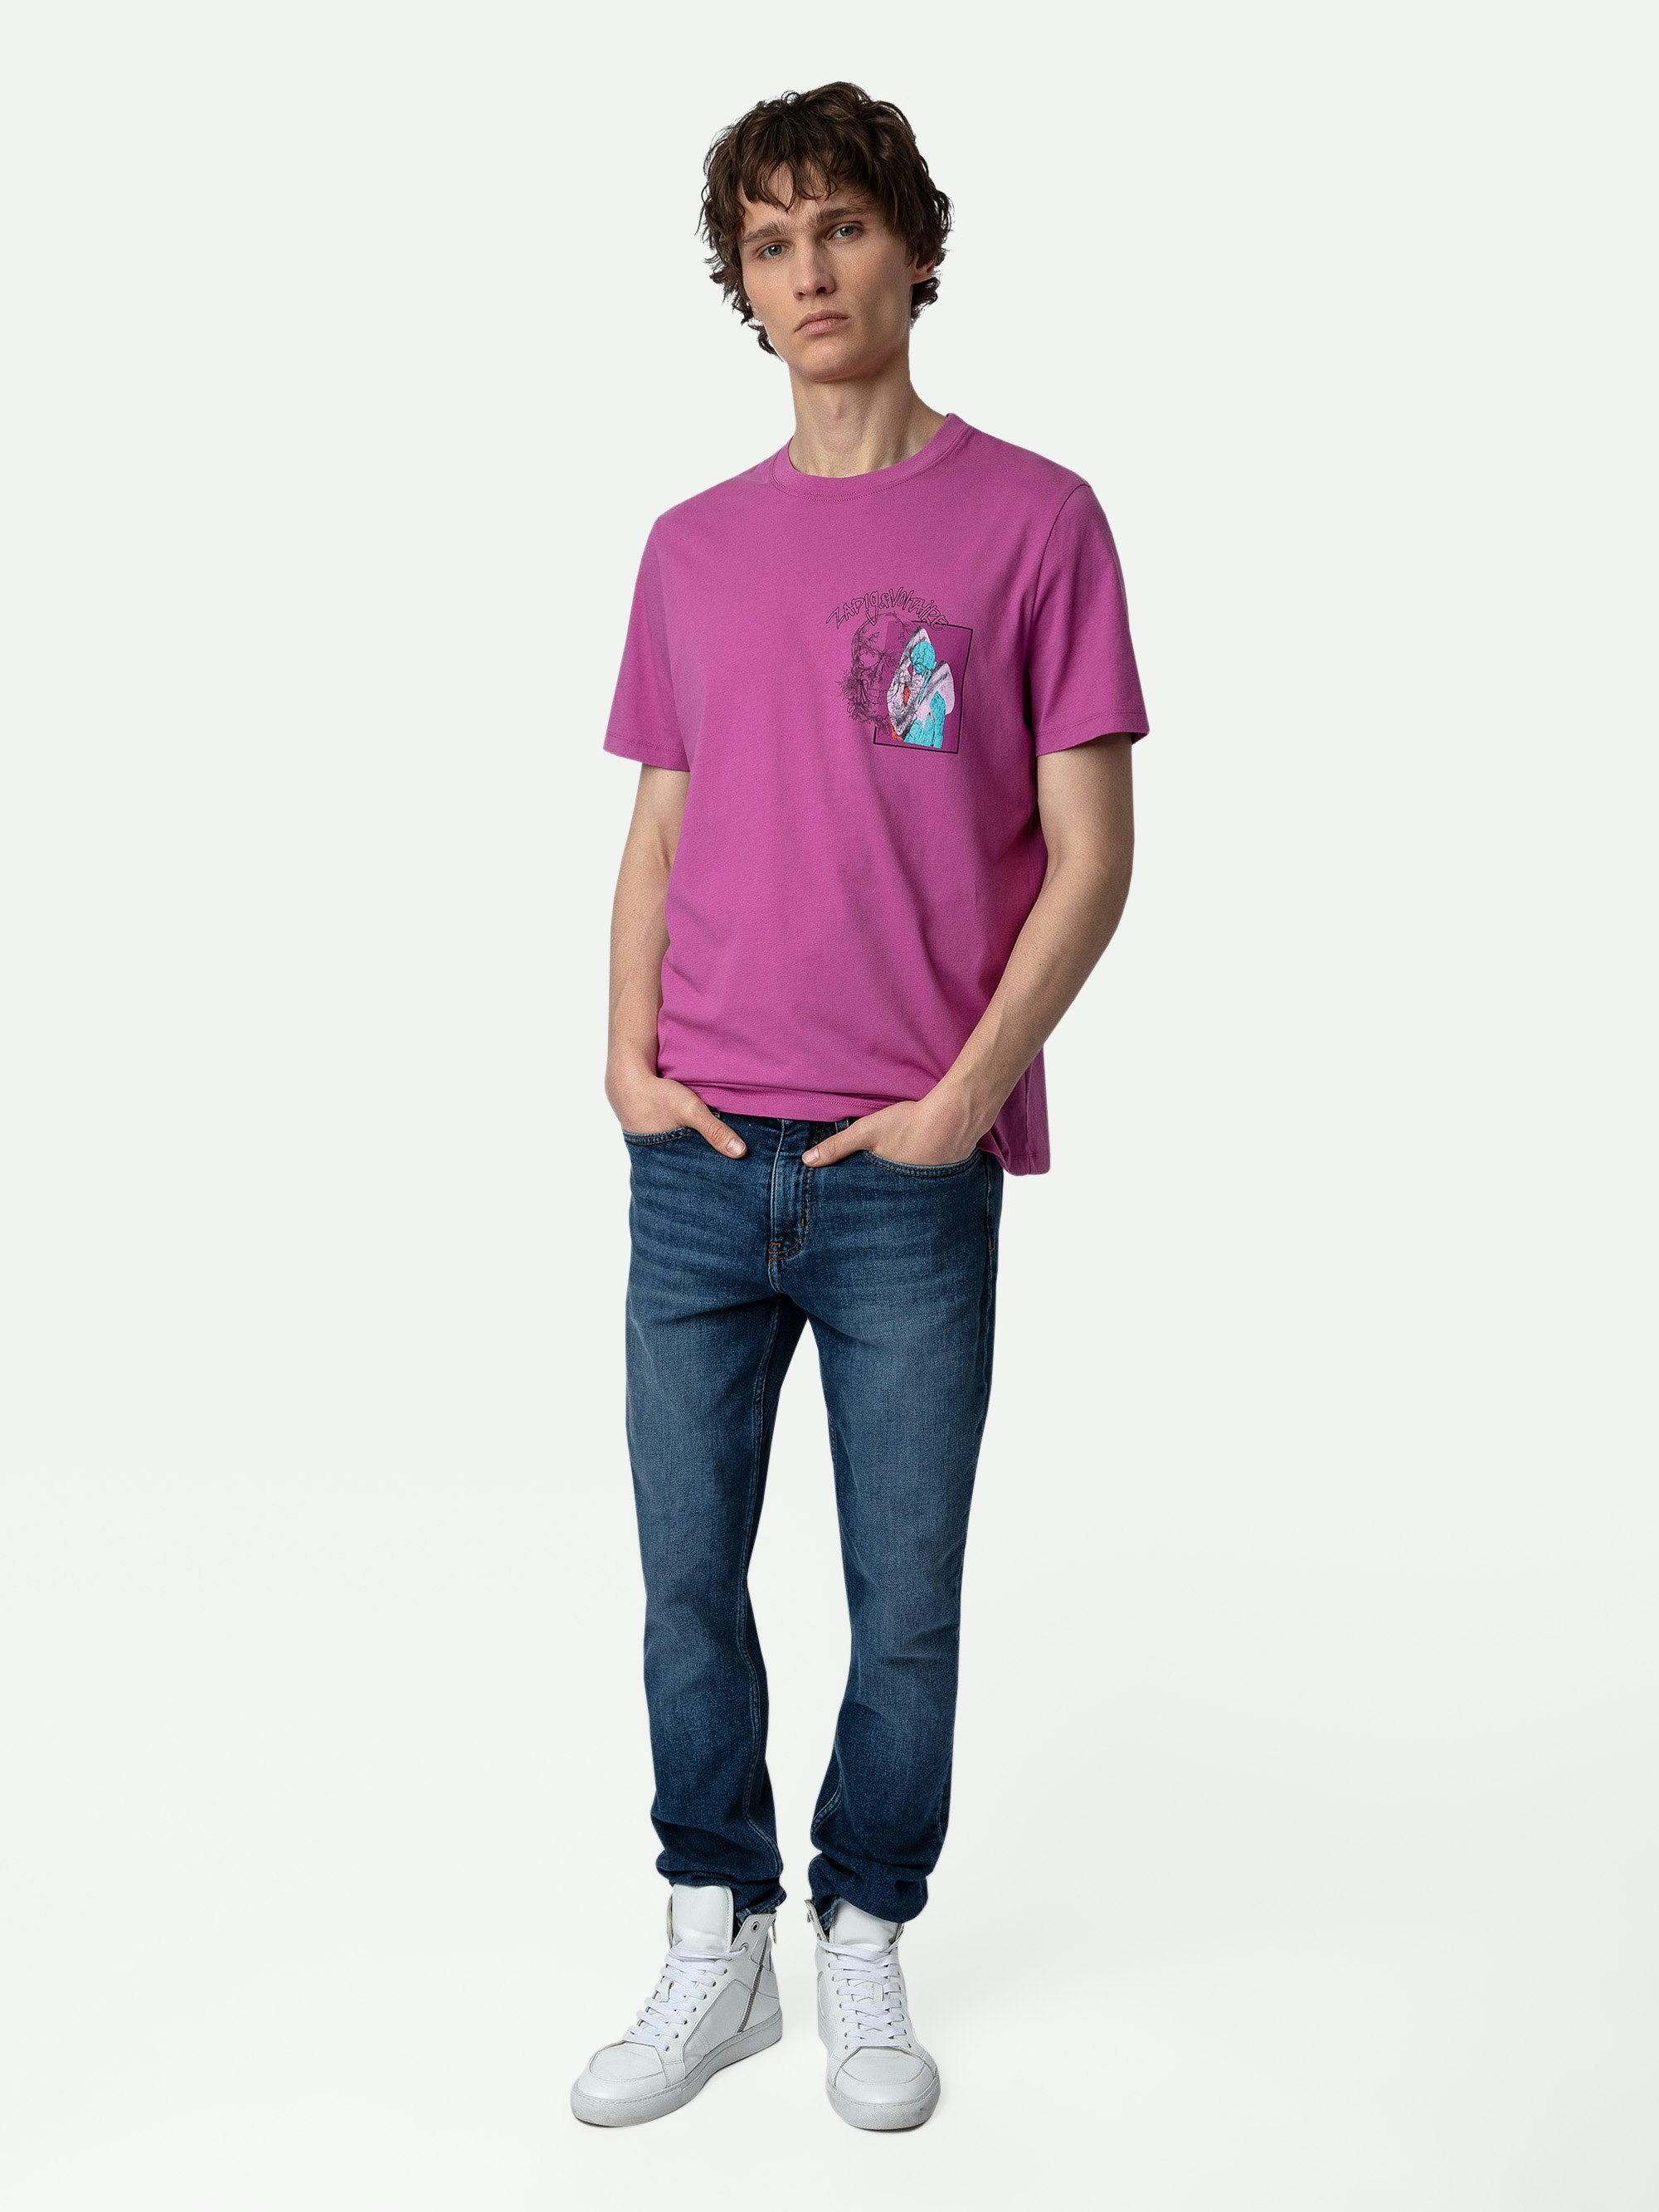 T-shirt Ted Photoprint - T-shirt en coton fuchsia à imprimé photoprint Graffiti tête de mort.